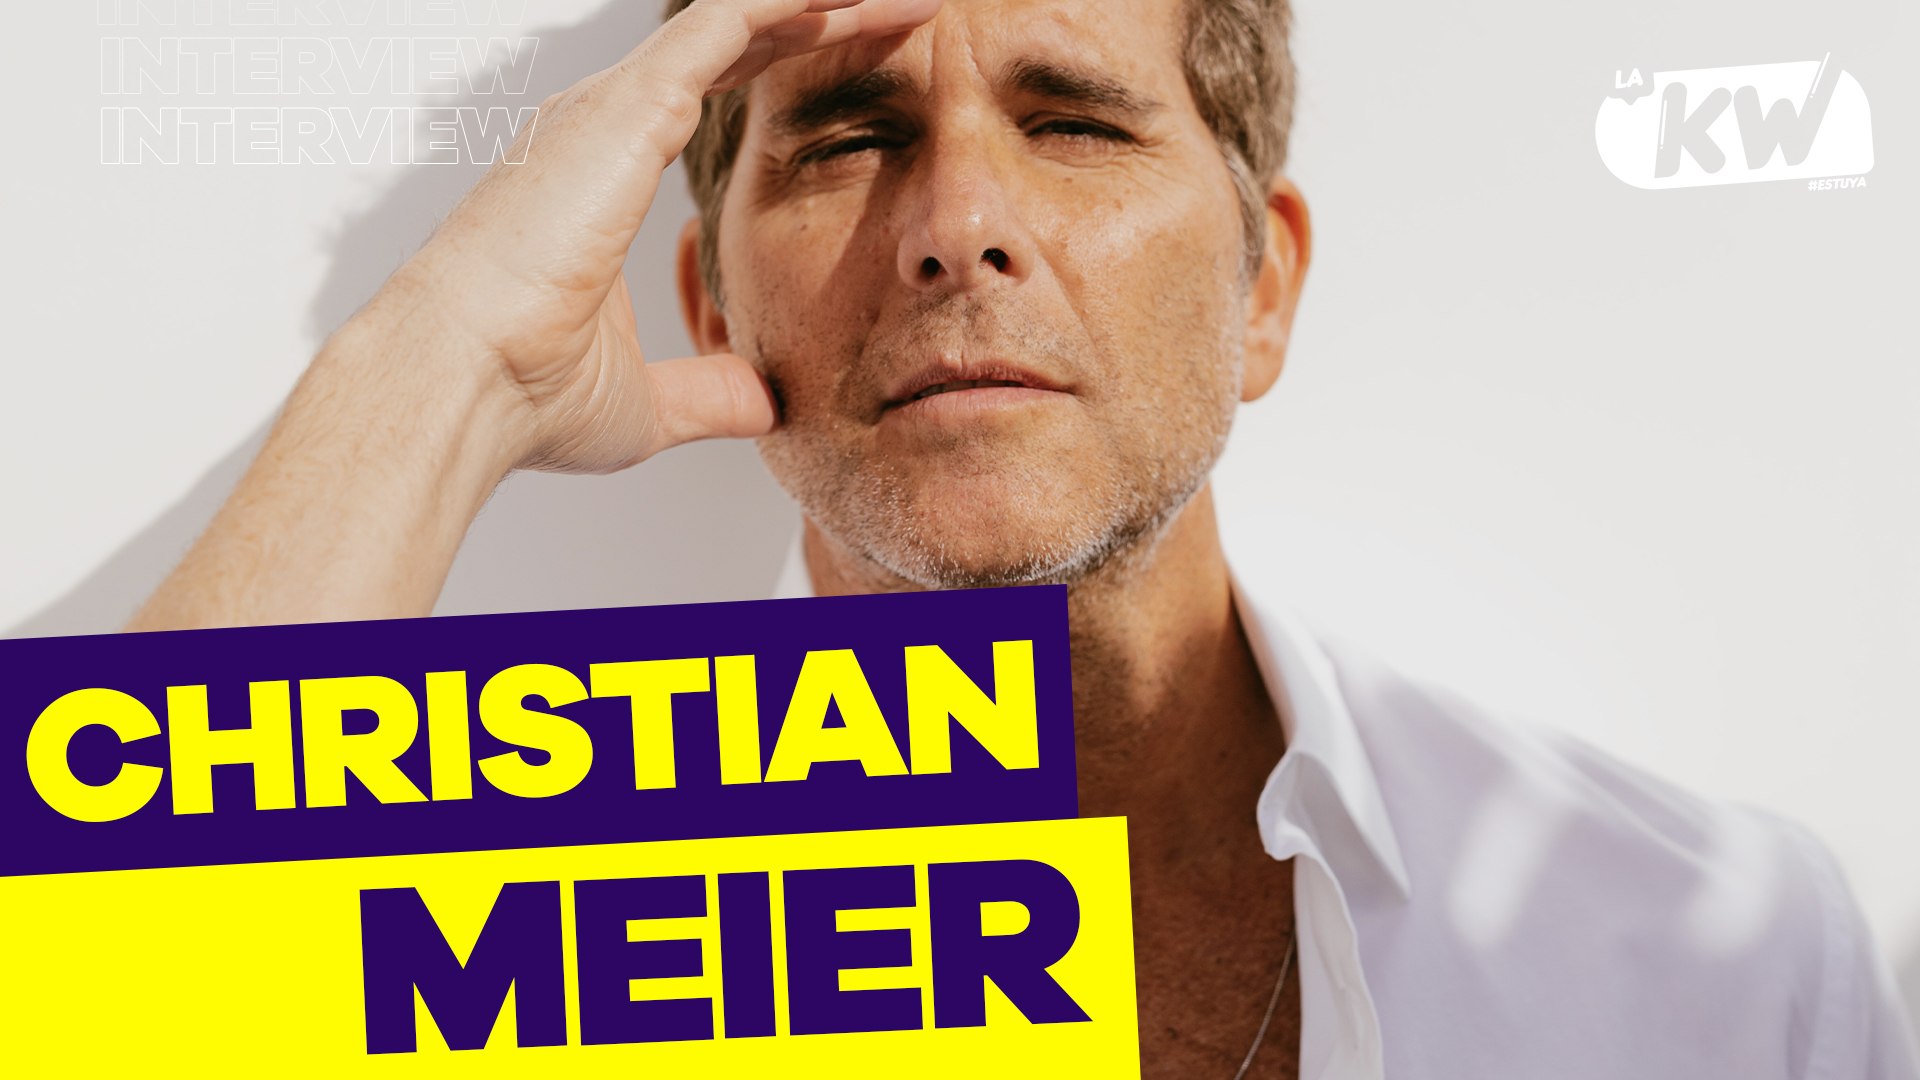 Christian Meier regresa a la música con su álbum “He Vuelto a Casa”